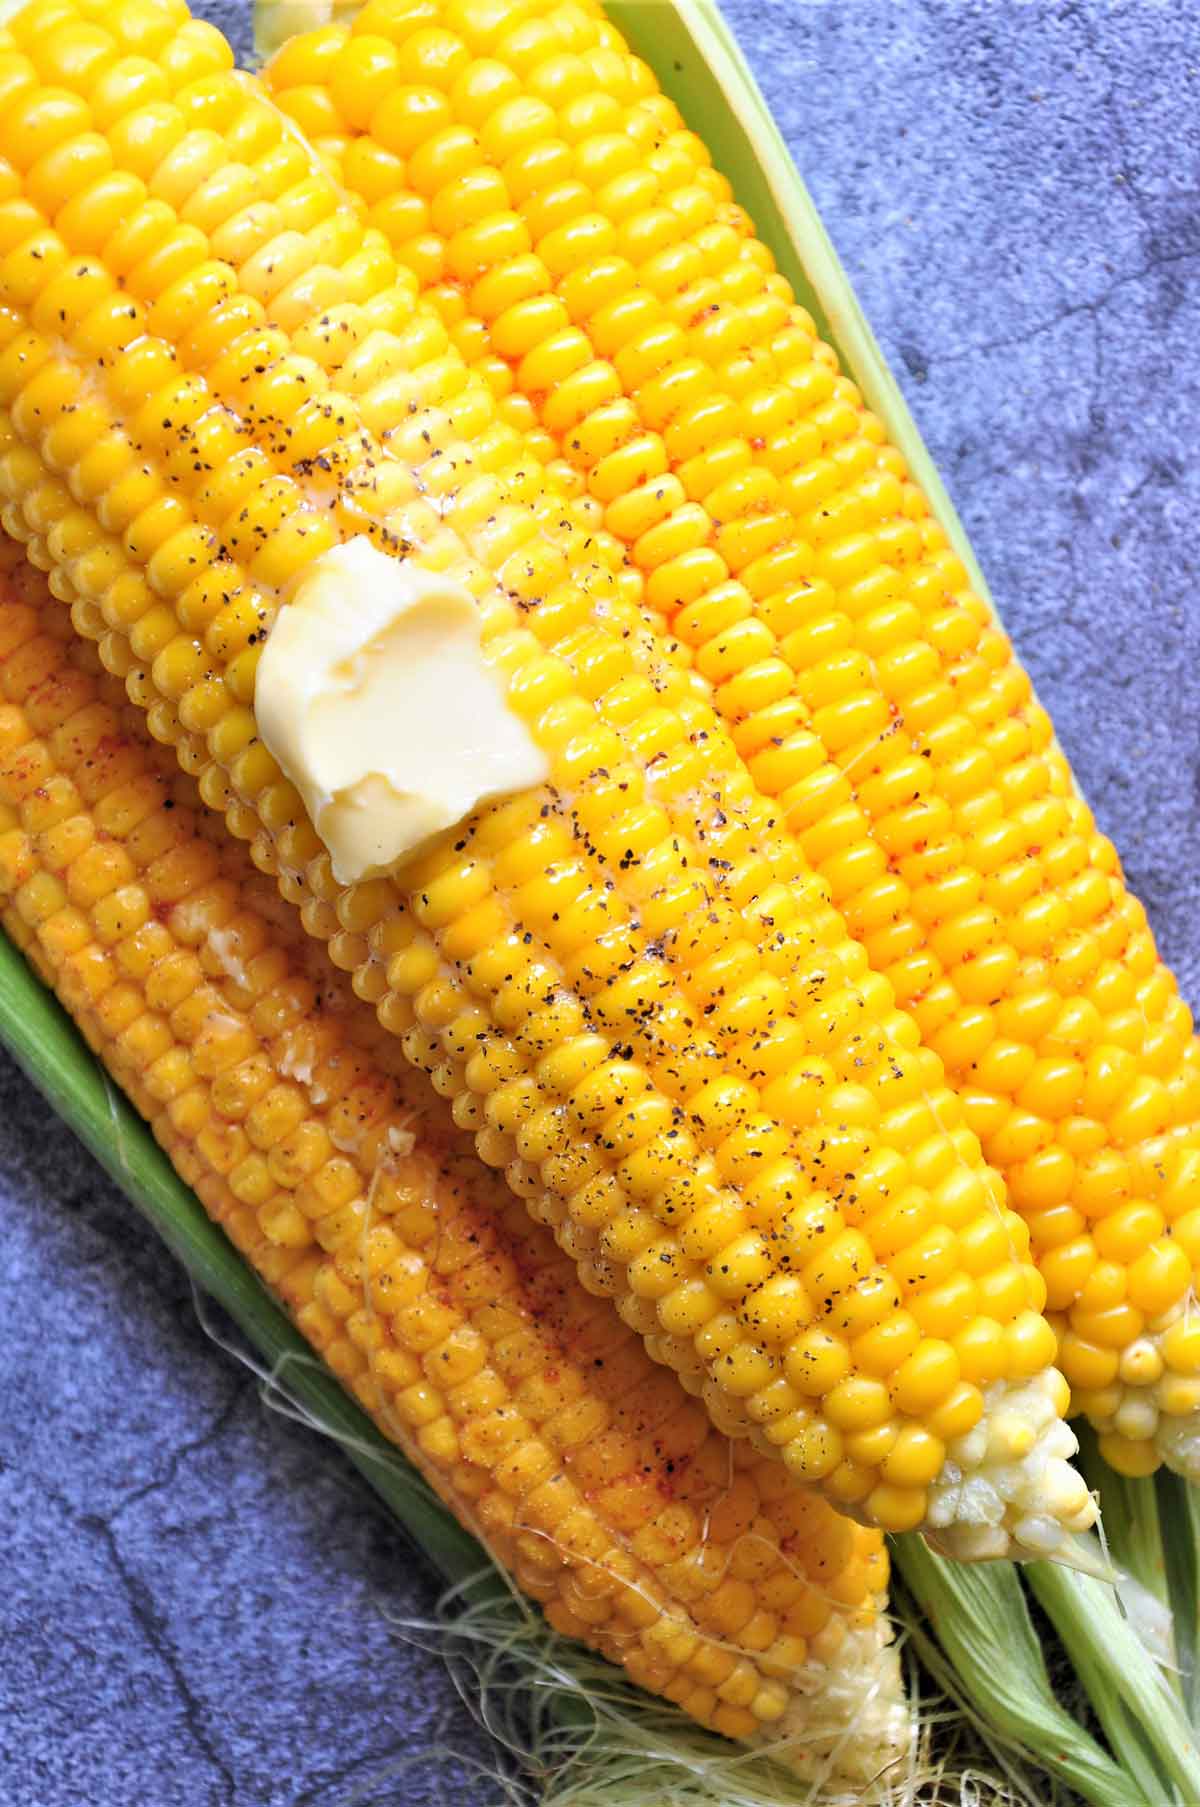 Three corn on the cob with seasoning.